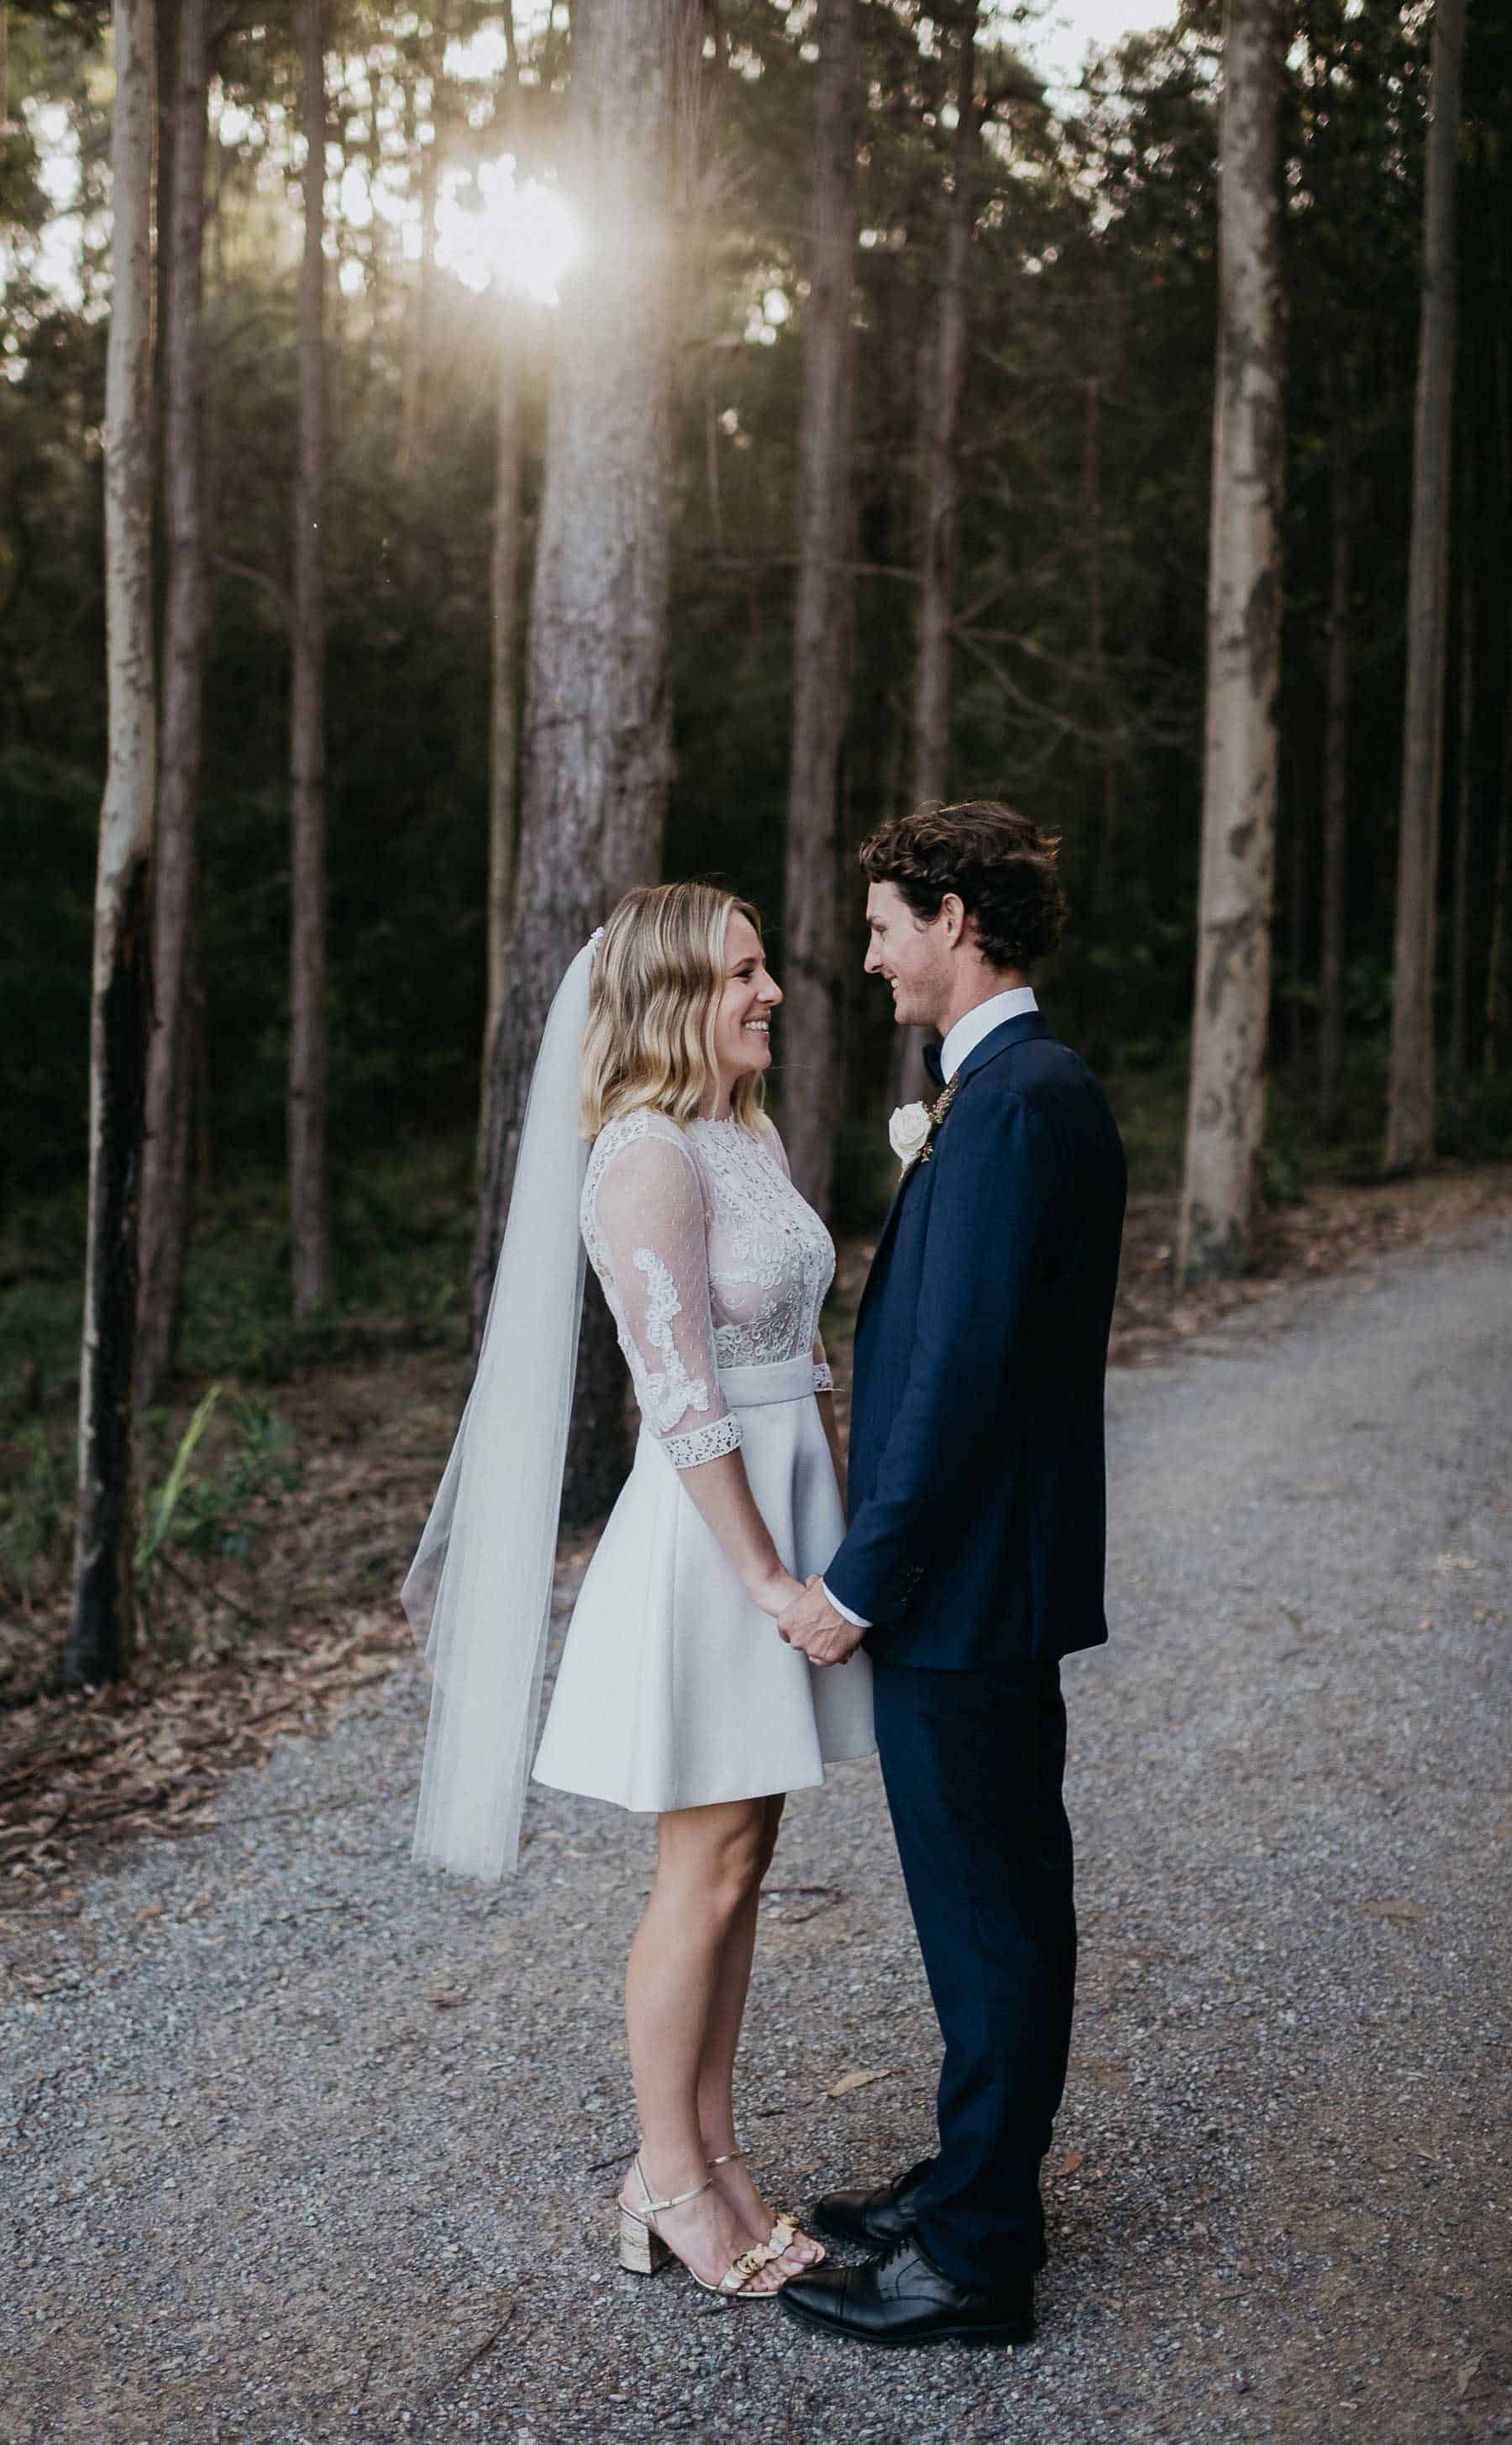 Best wedding dresses of 2019 - simple long sleeve short wedding dress